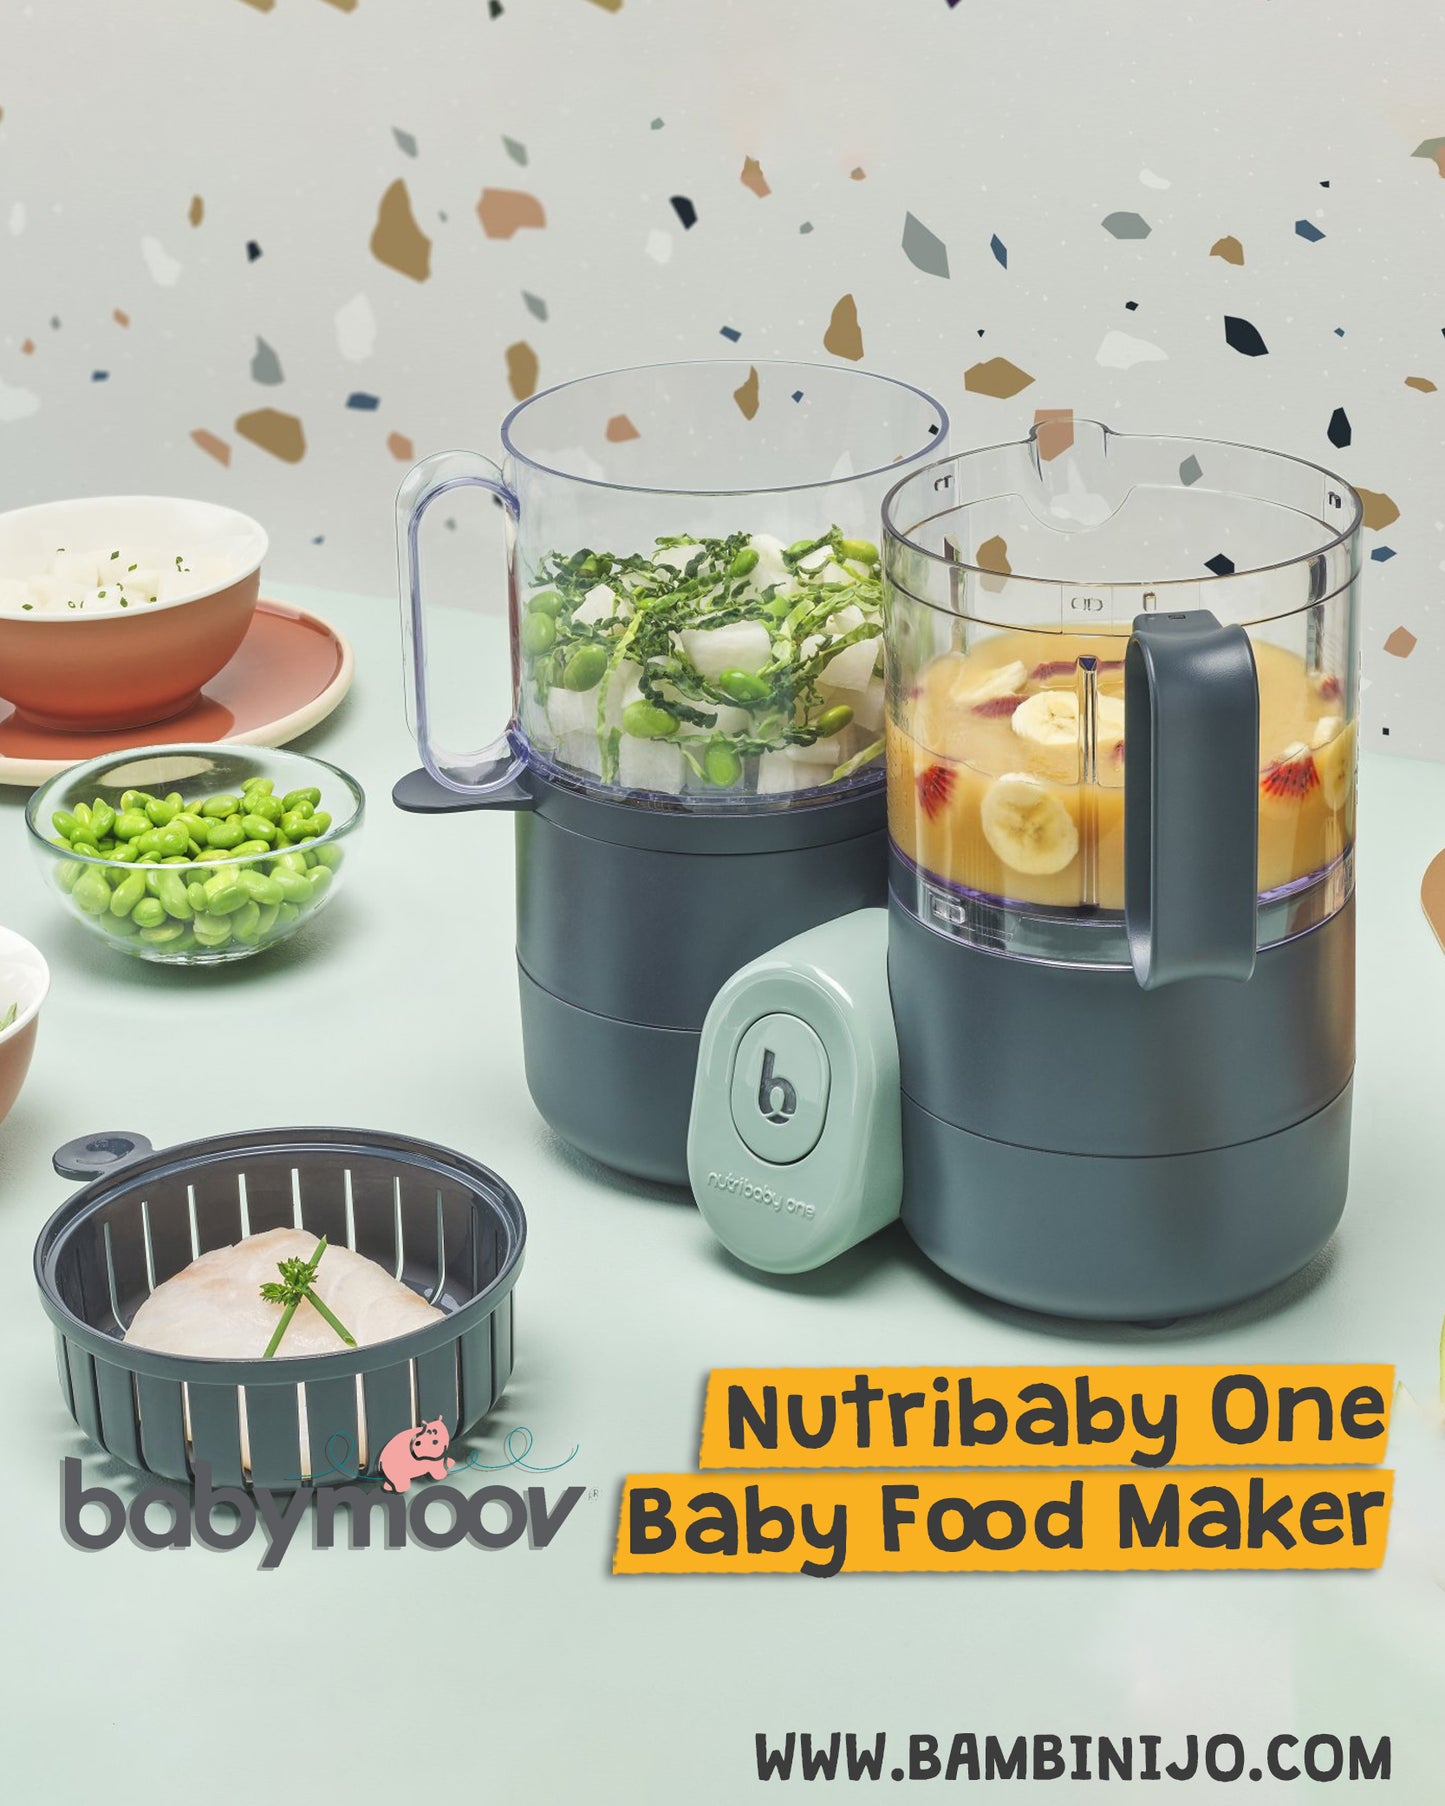 Babymoov - Nutribaby One Baby Food Maker